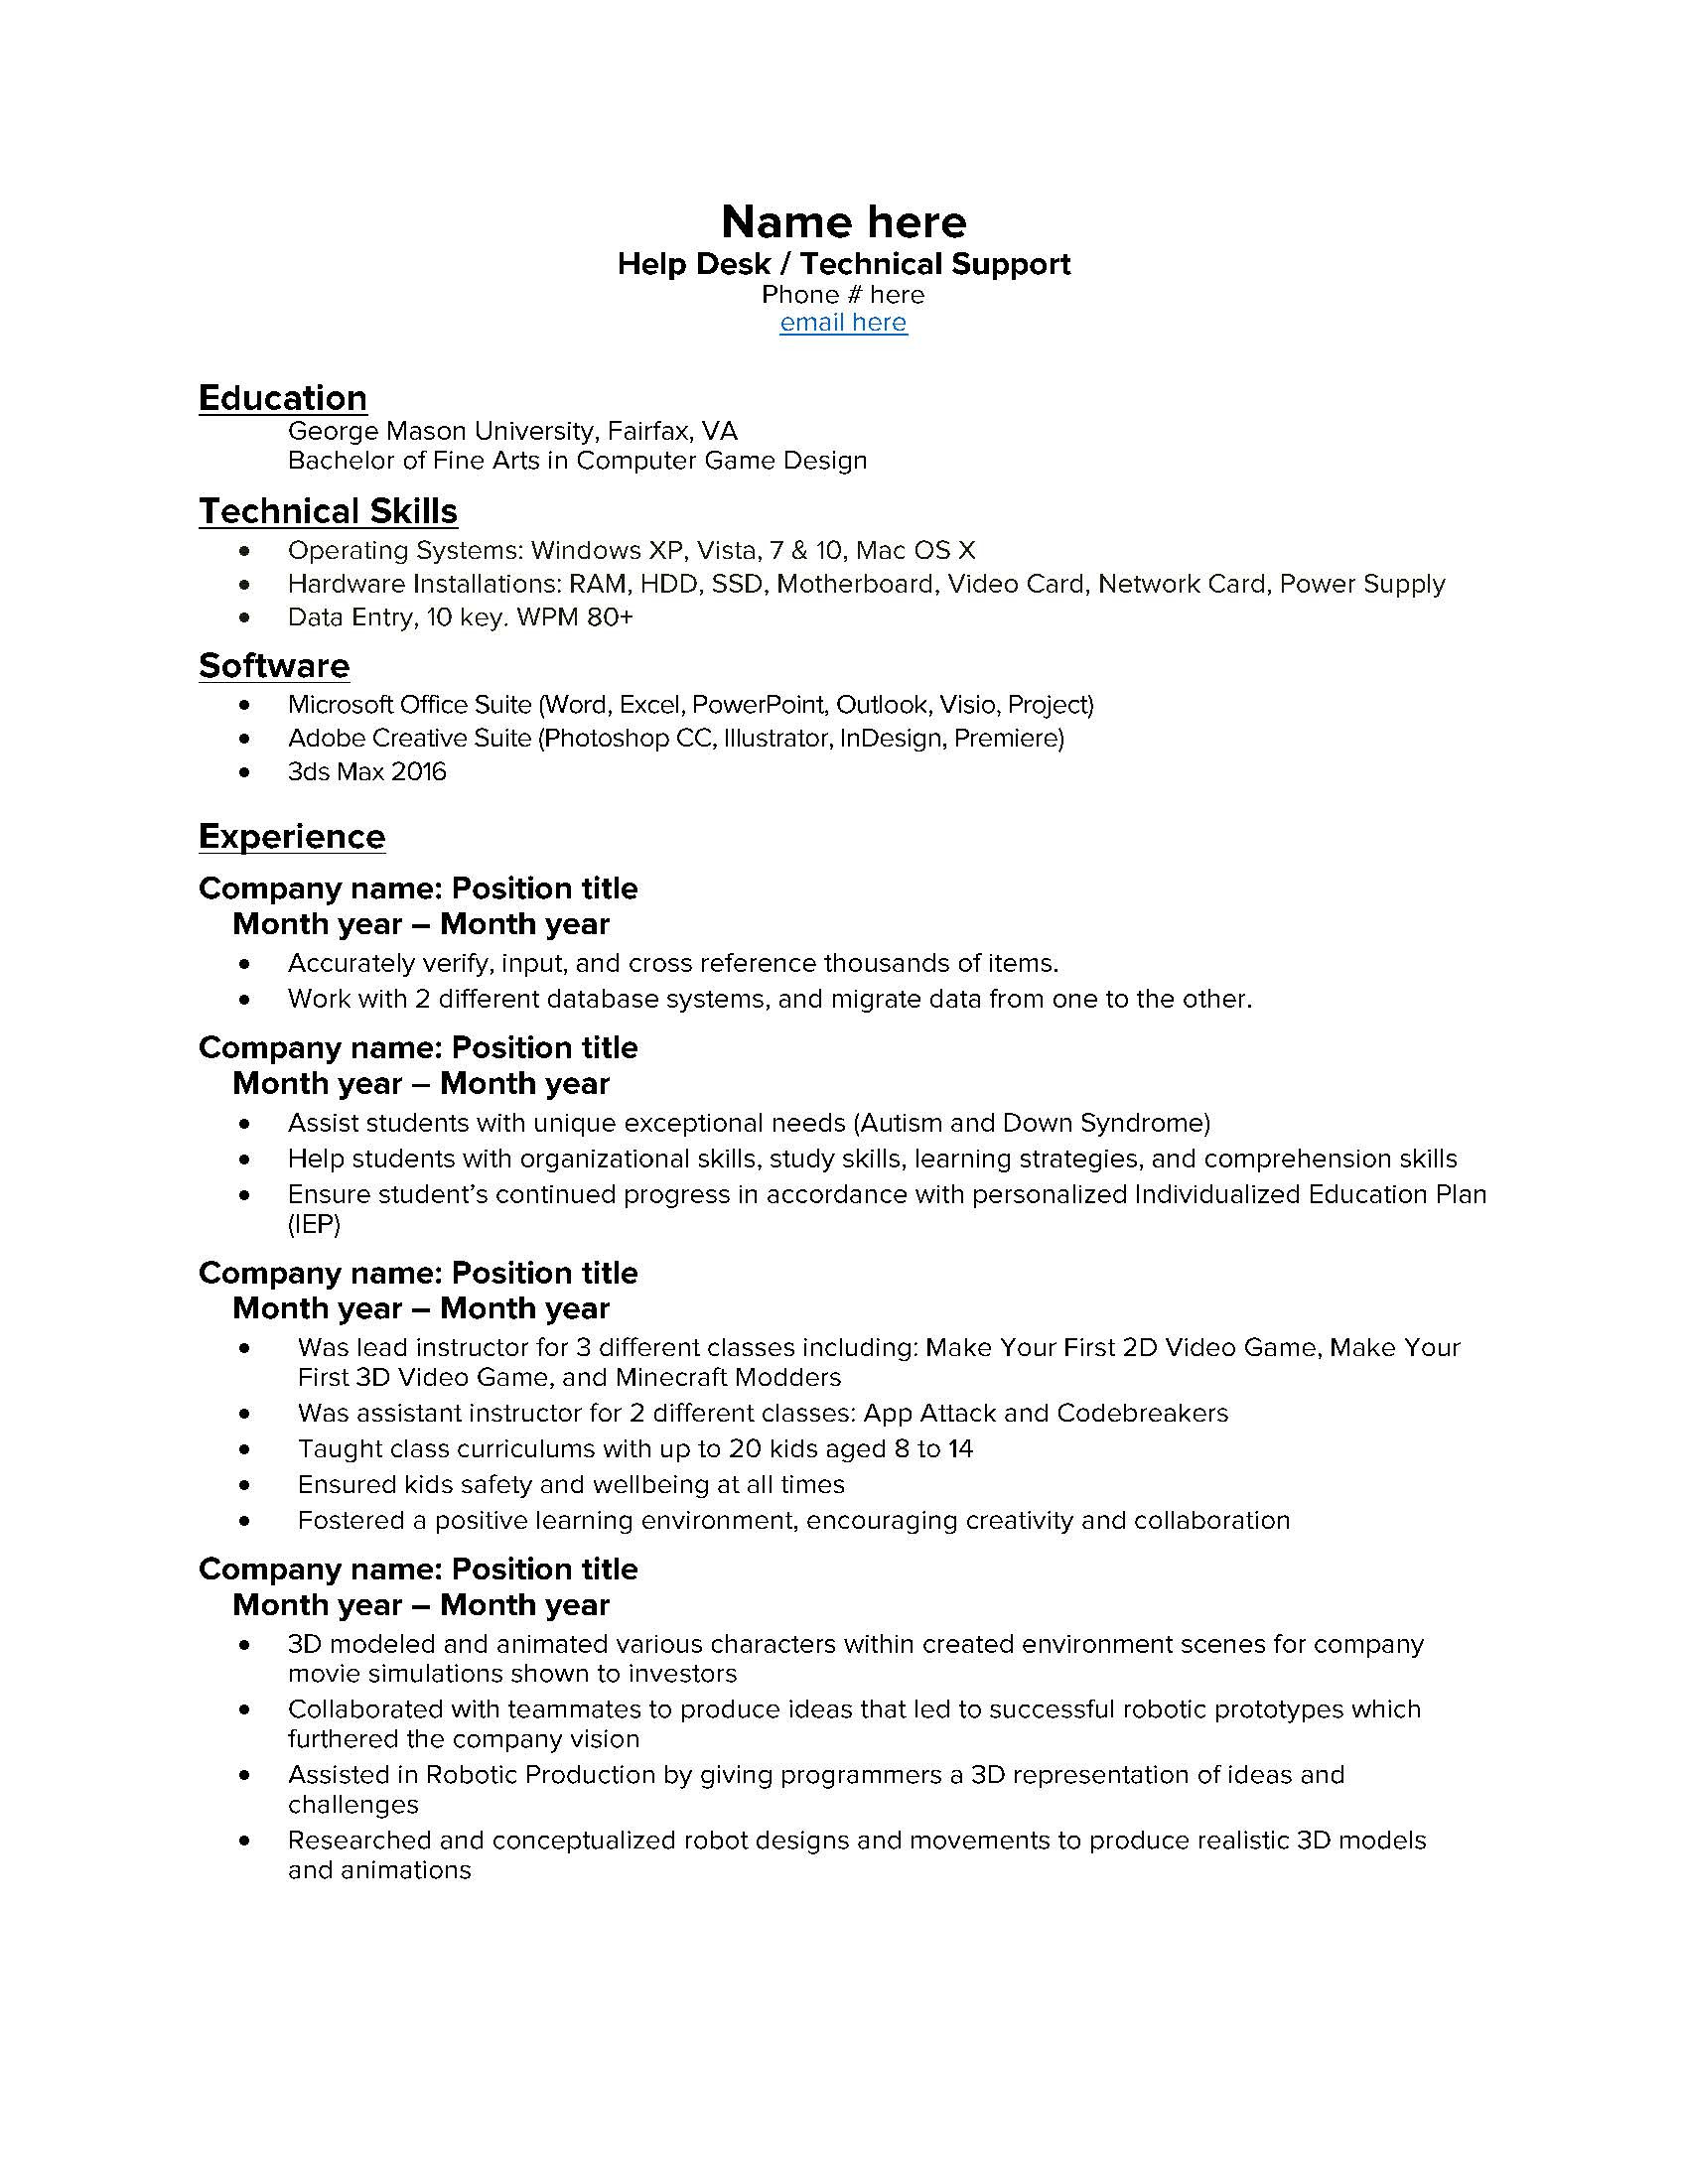 Tier 1 Help Desk Resume Sample Entry Level Help Desk Resume : R/resumes